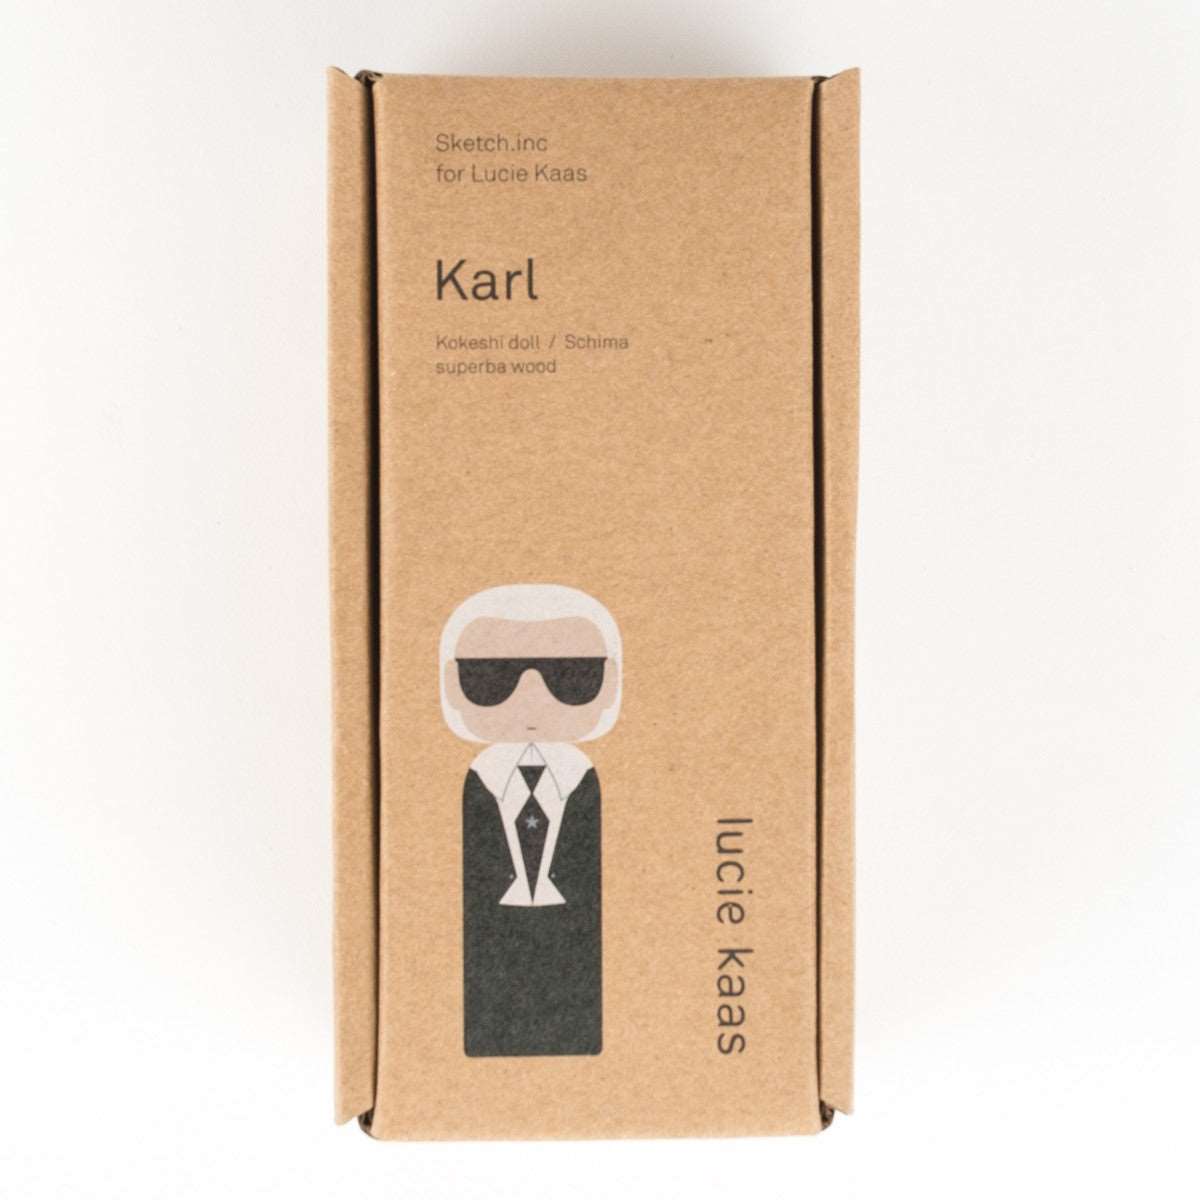 Lucie Kaas Sketch Inc Kokeshi Doll Karl Lagerfeld